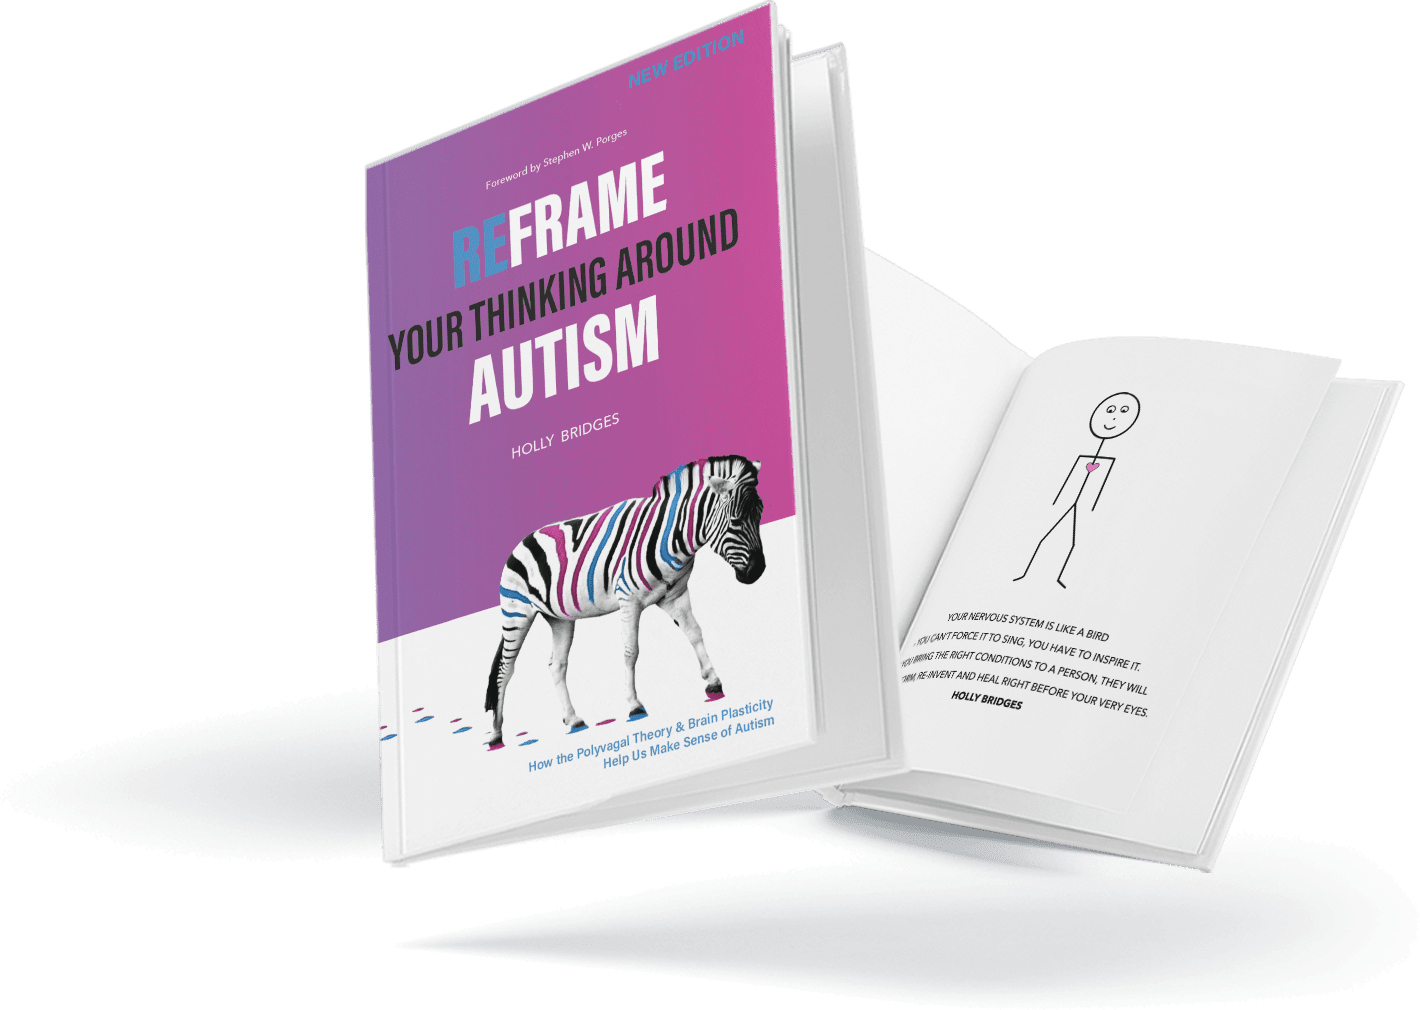 Reframe Your Thinking Around Autism book